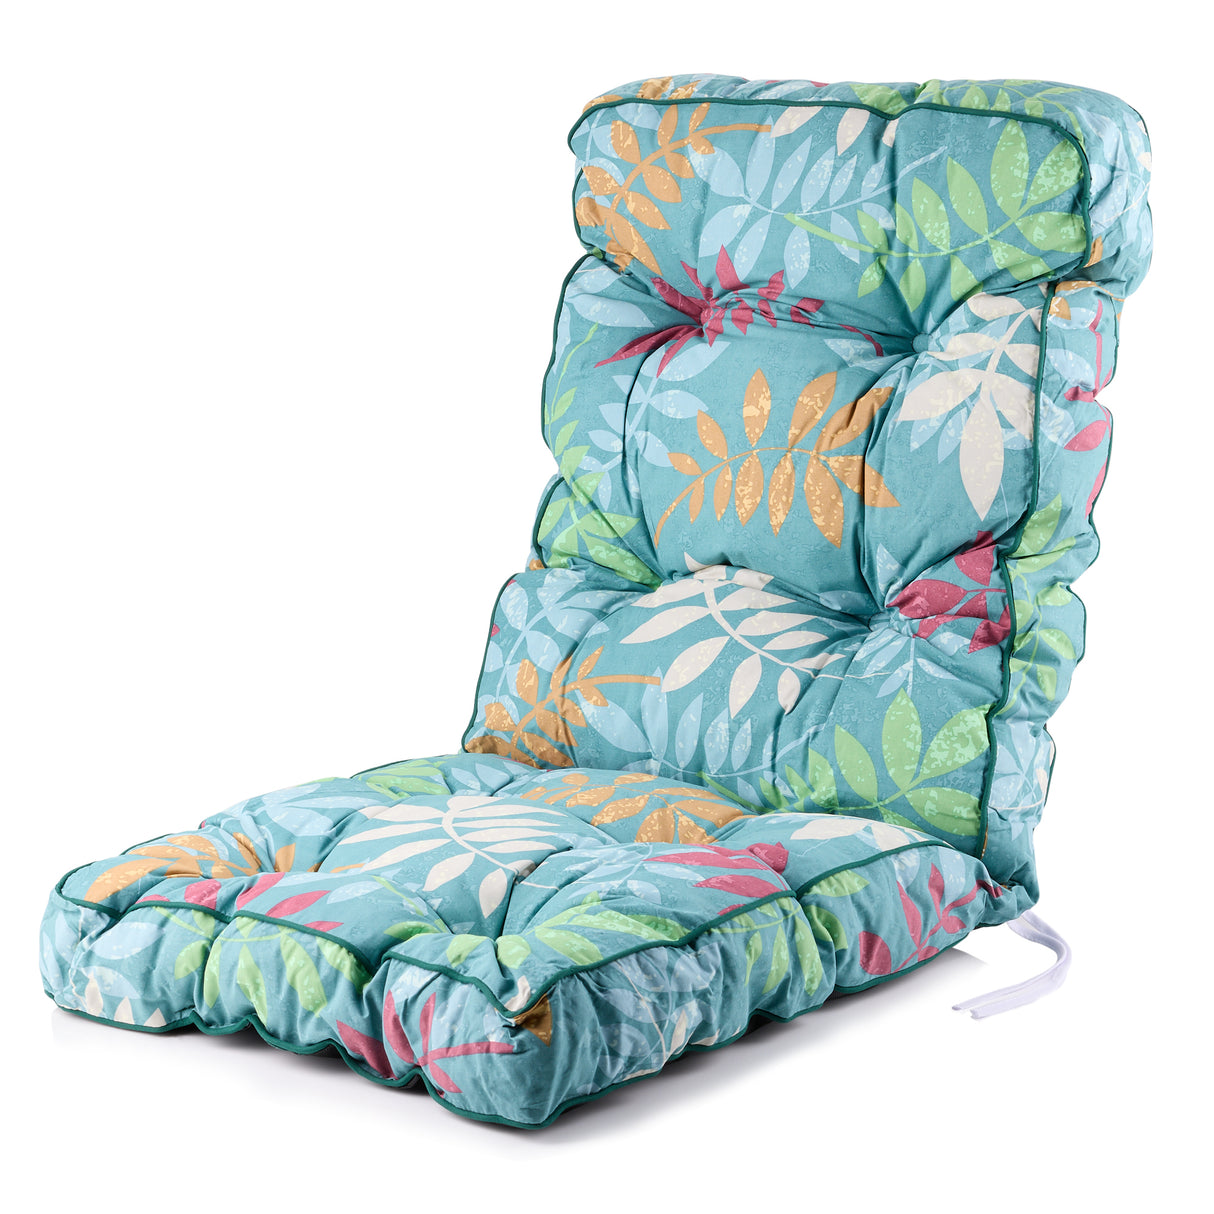 Alfresia Garden Chair Cushions - Classic Recliner Style